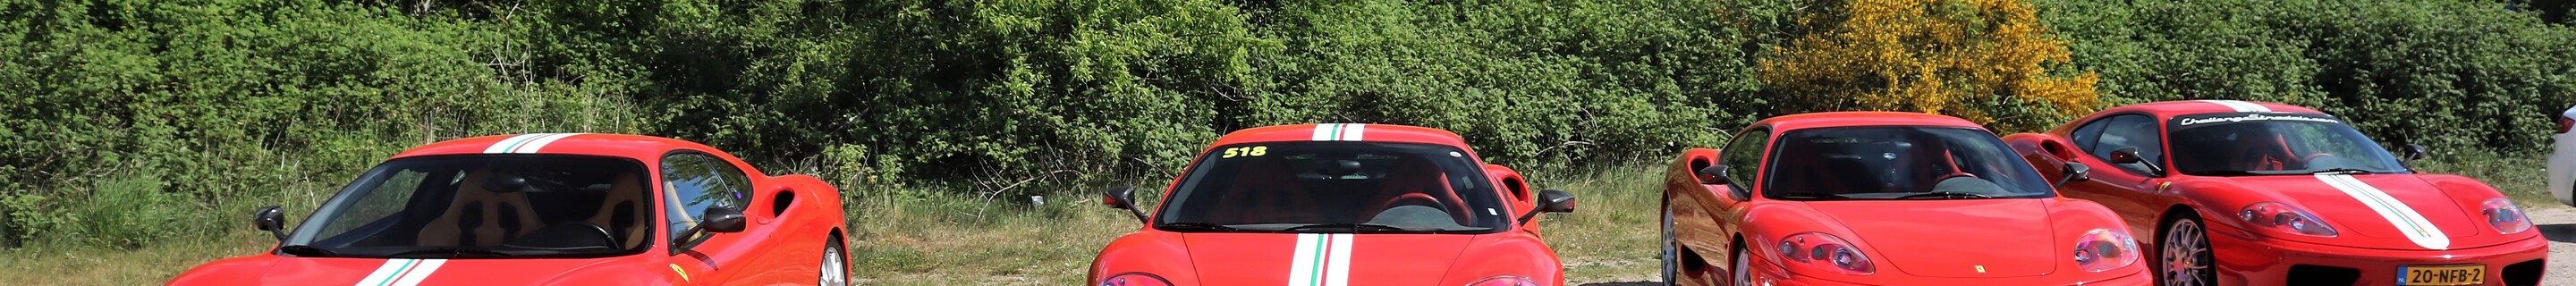 Ferrari Challenge Stradale